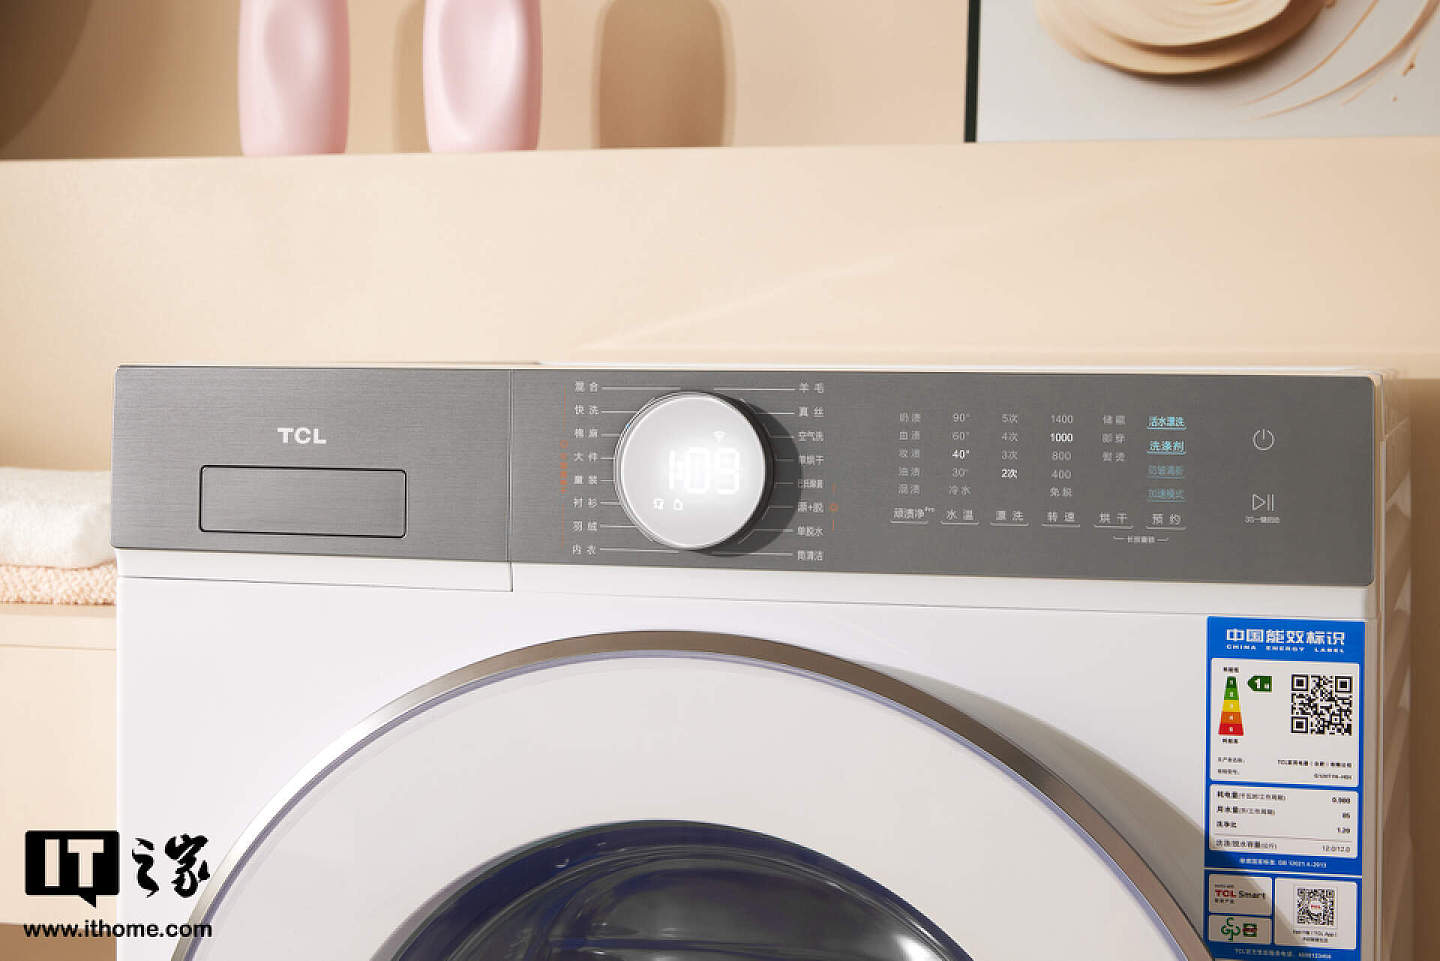 【IT之家评测室】TCL 超级筒洗衣机 T7H 体验：高达 1.2 洗净比，顽固污渍杀手 - 3